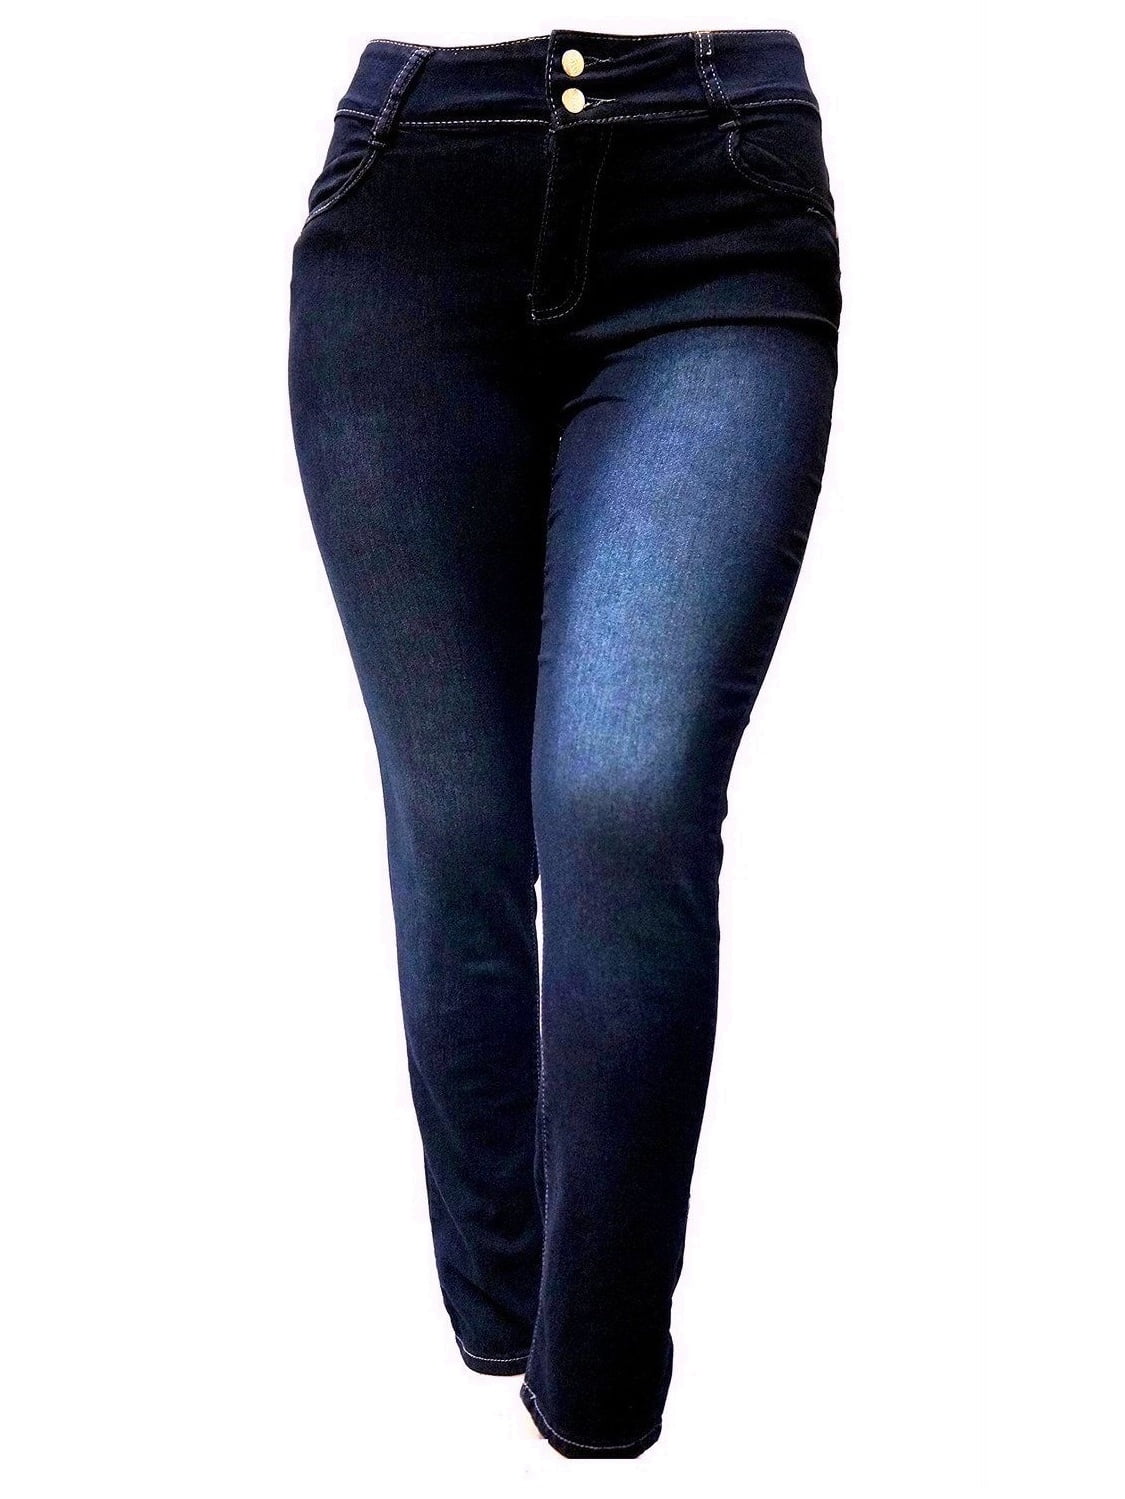 Women Skinny Jeans Trouser Clubbing Ladies Wet Black Blue Pant Size 6 8 10 12 14 